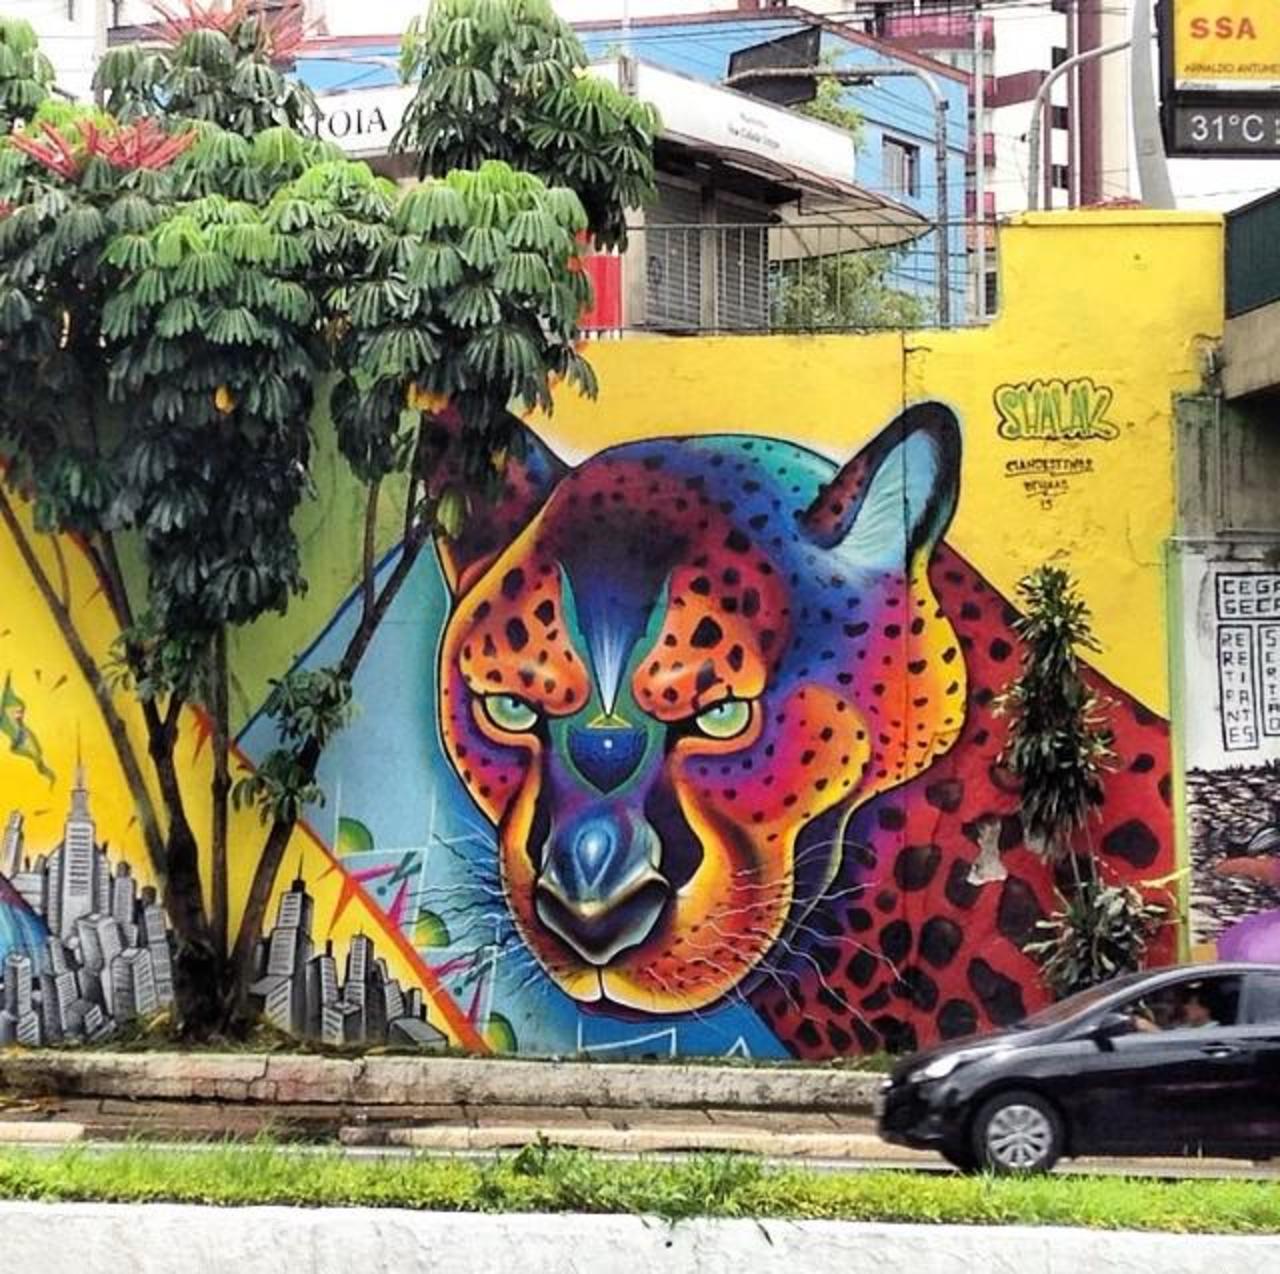 Artist ShalakAttack beautiful & colourful nature in Street Art piece in São Paulo 

#art #graffiti #mural #streetart http://t.co/8DlhJdzir4